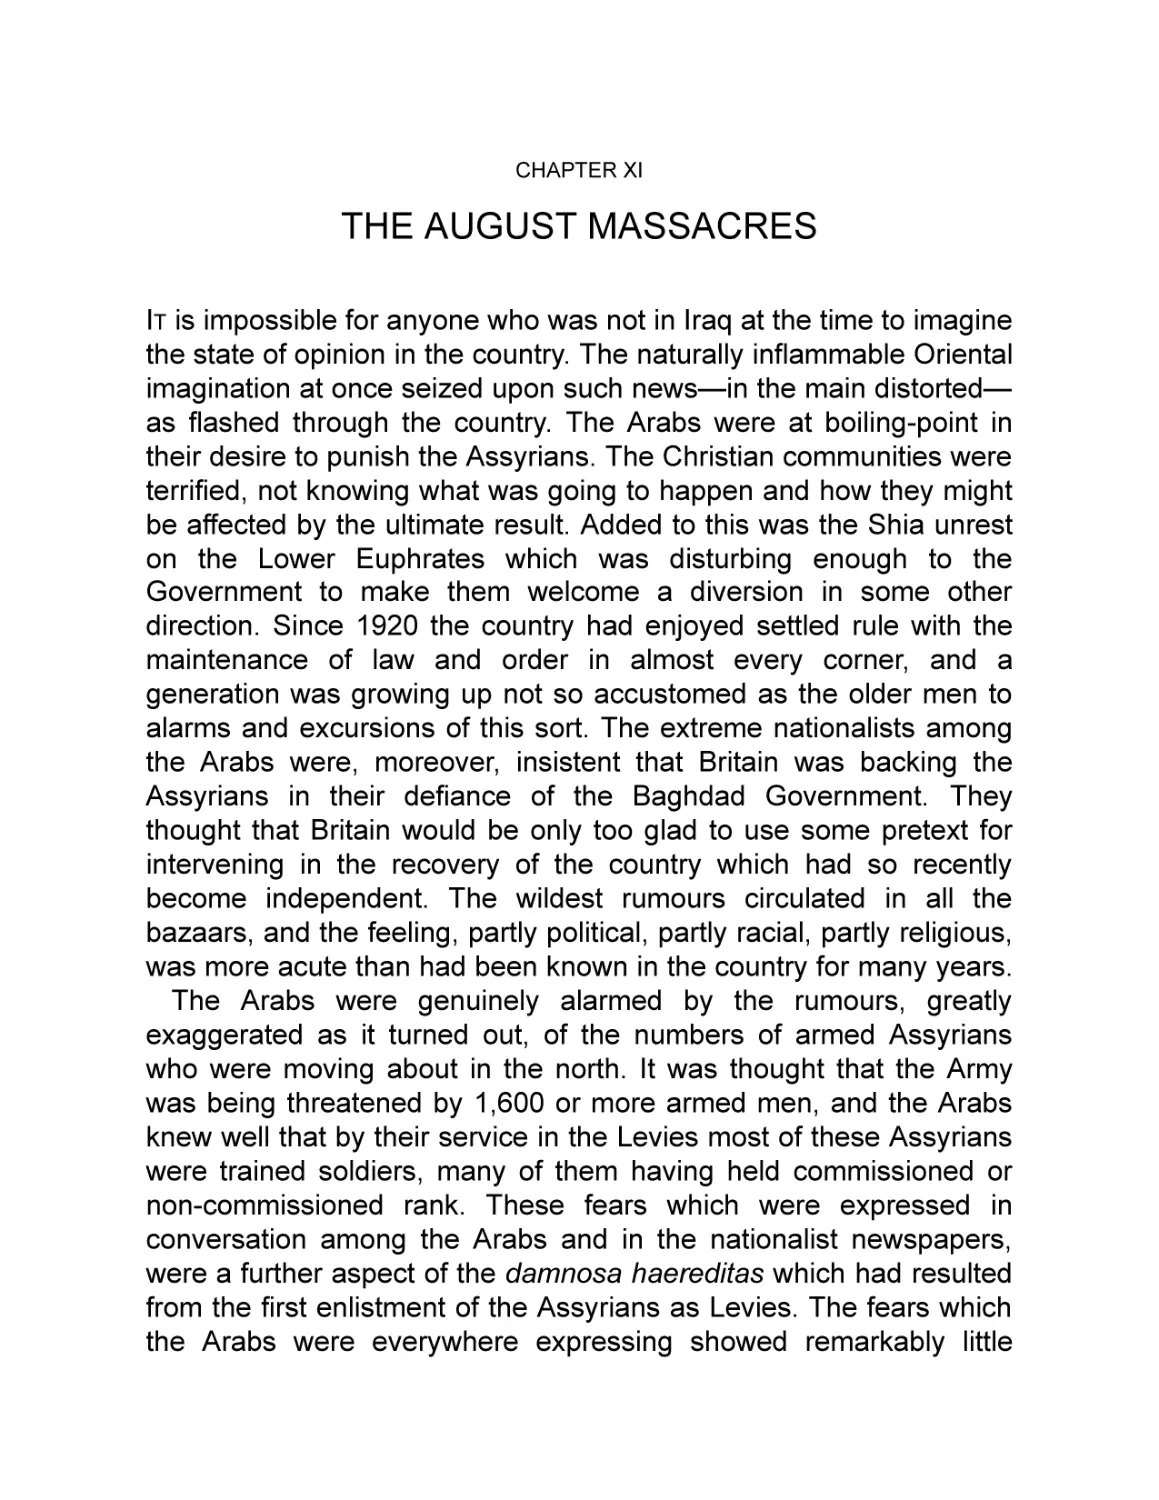 XI The August Massacres